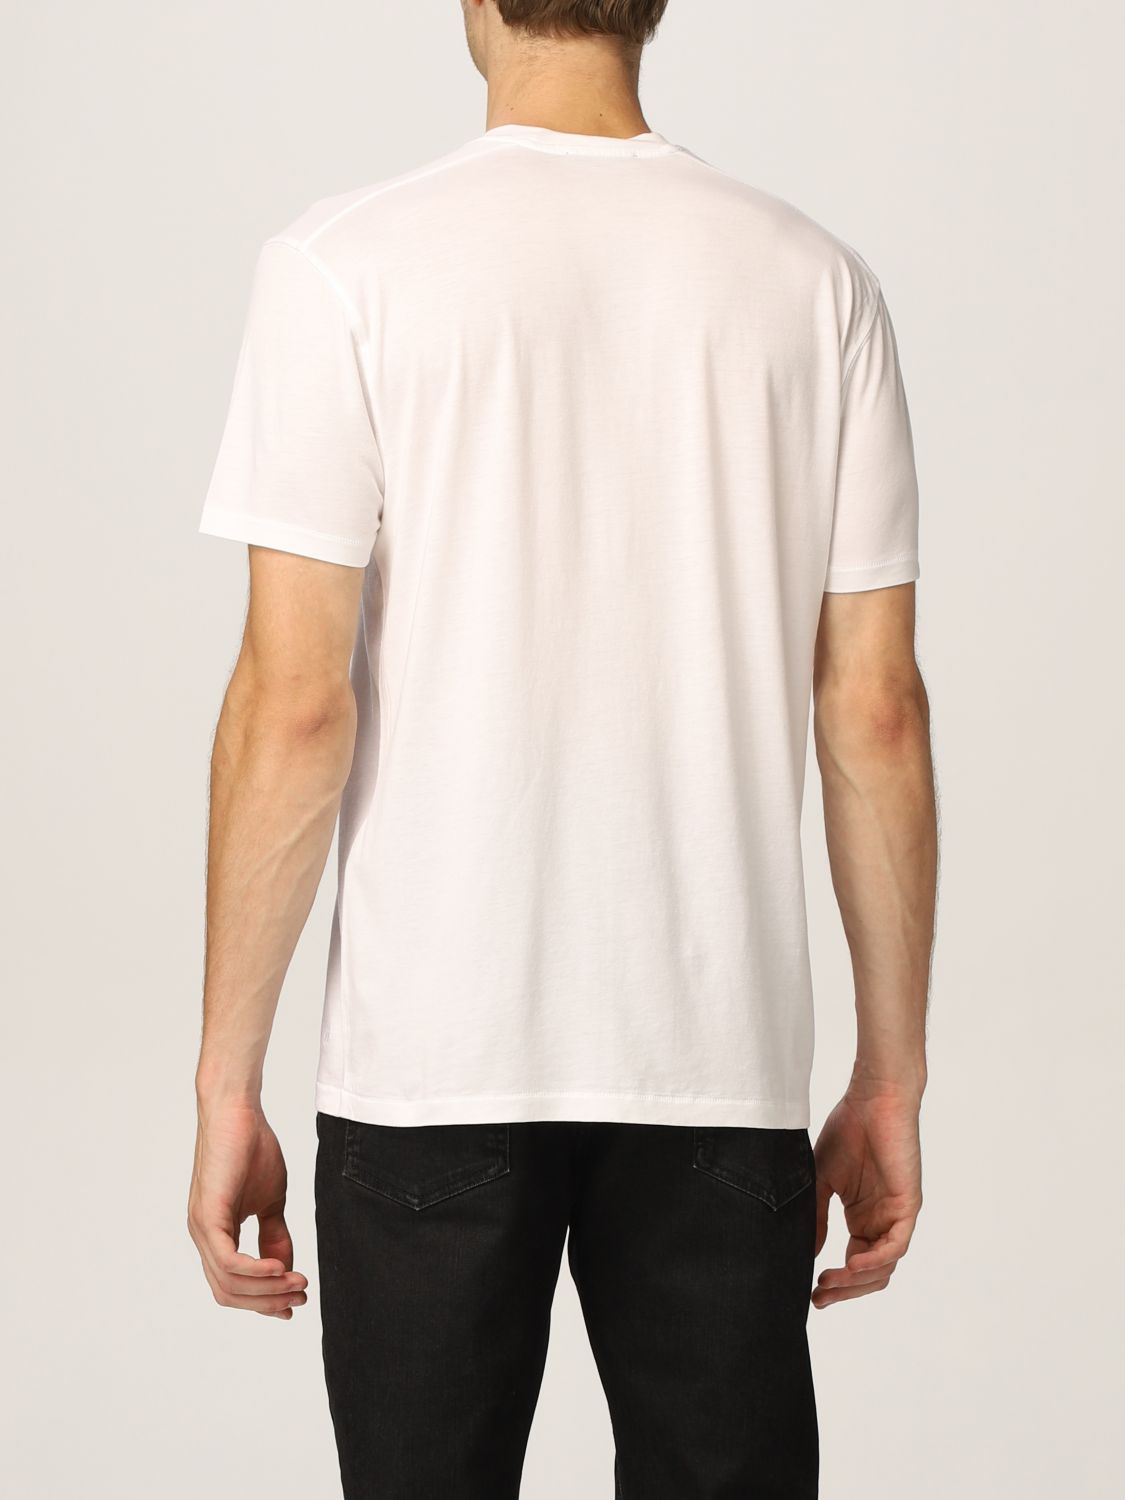 Camiseta Tom Ford: Camiseta hombre Tom Ford blanco 2